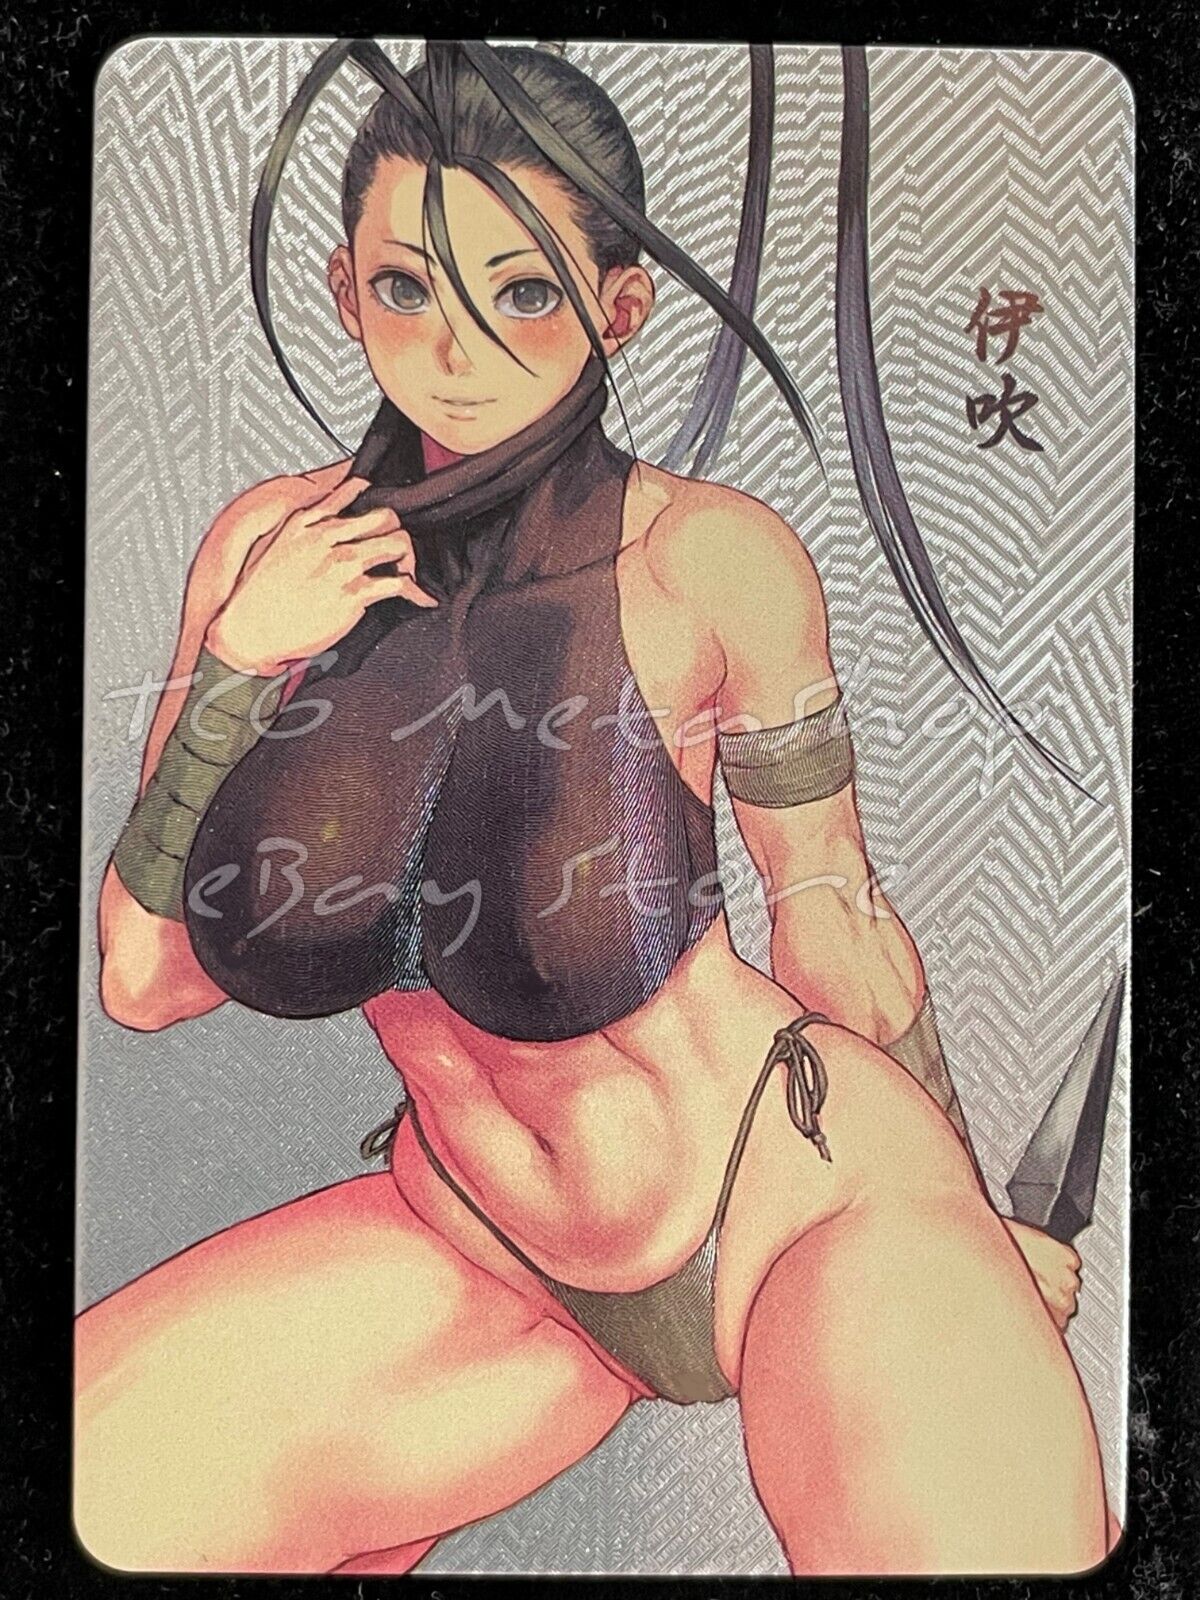 🔥 Ibuki Street Fighter Goddess Story Anime Card ACG # 2336 🔥